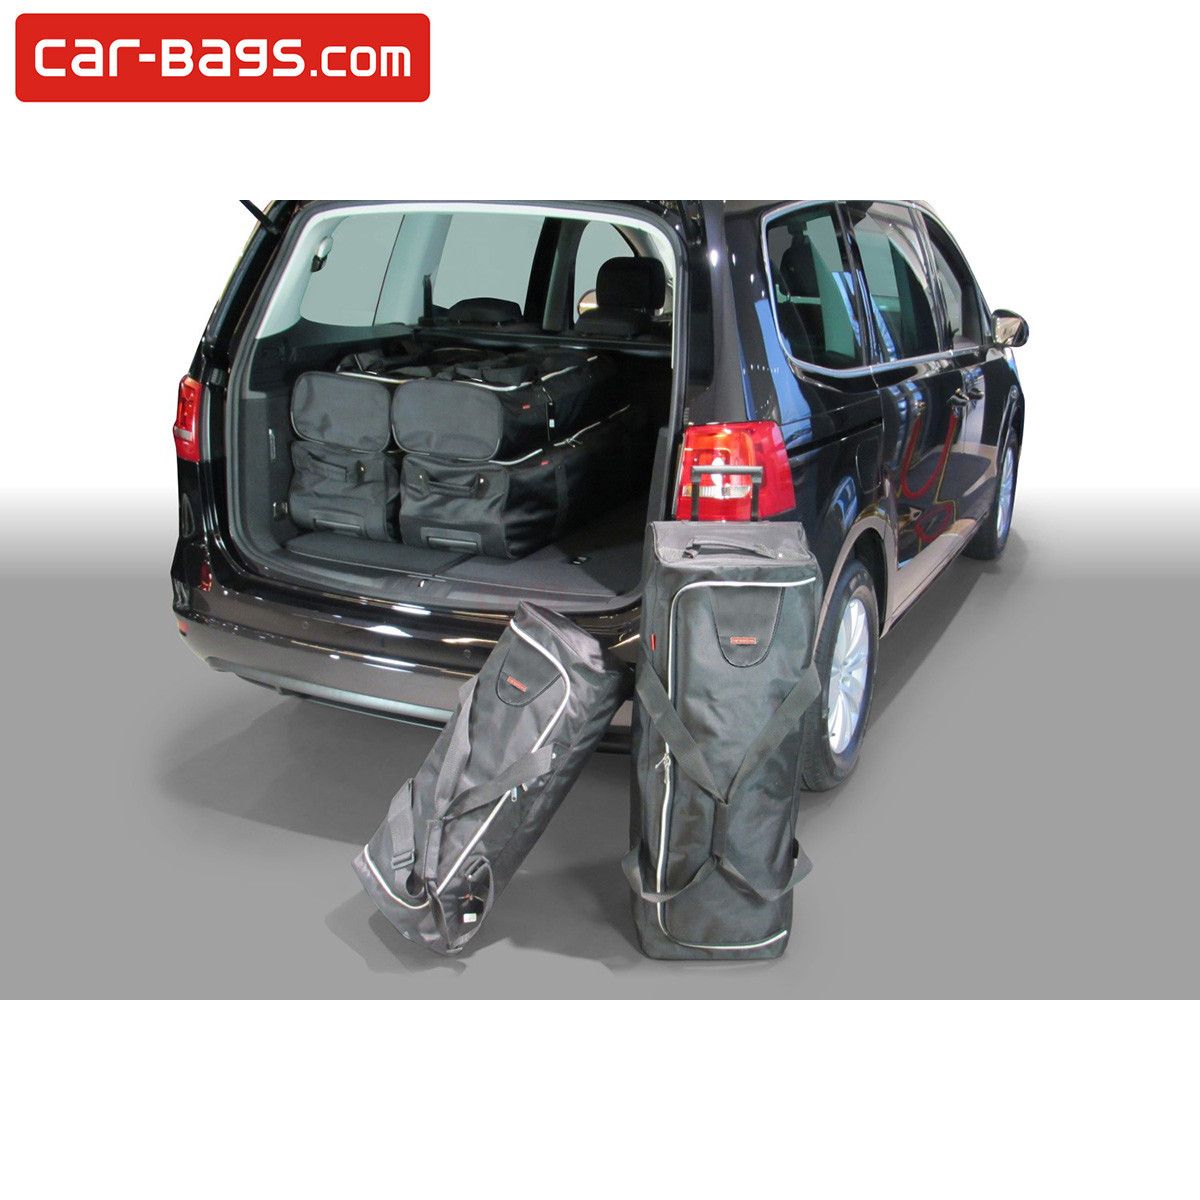 https://www.shopforcovers.com/media/catalog/product/cache/631291e9508c094133a2ca1d66c3e1d9/h/t/httpswww.car-bags.comimagesstoriesvirtuemartproducts30401s-seat-alhambra-11-car-bags-179.jpg